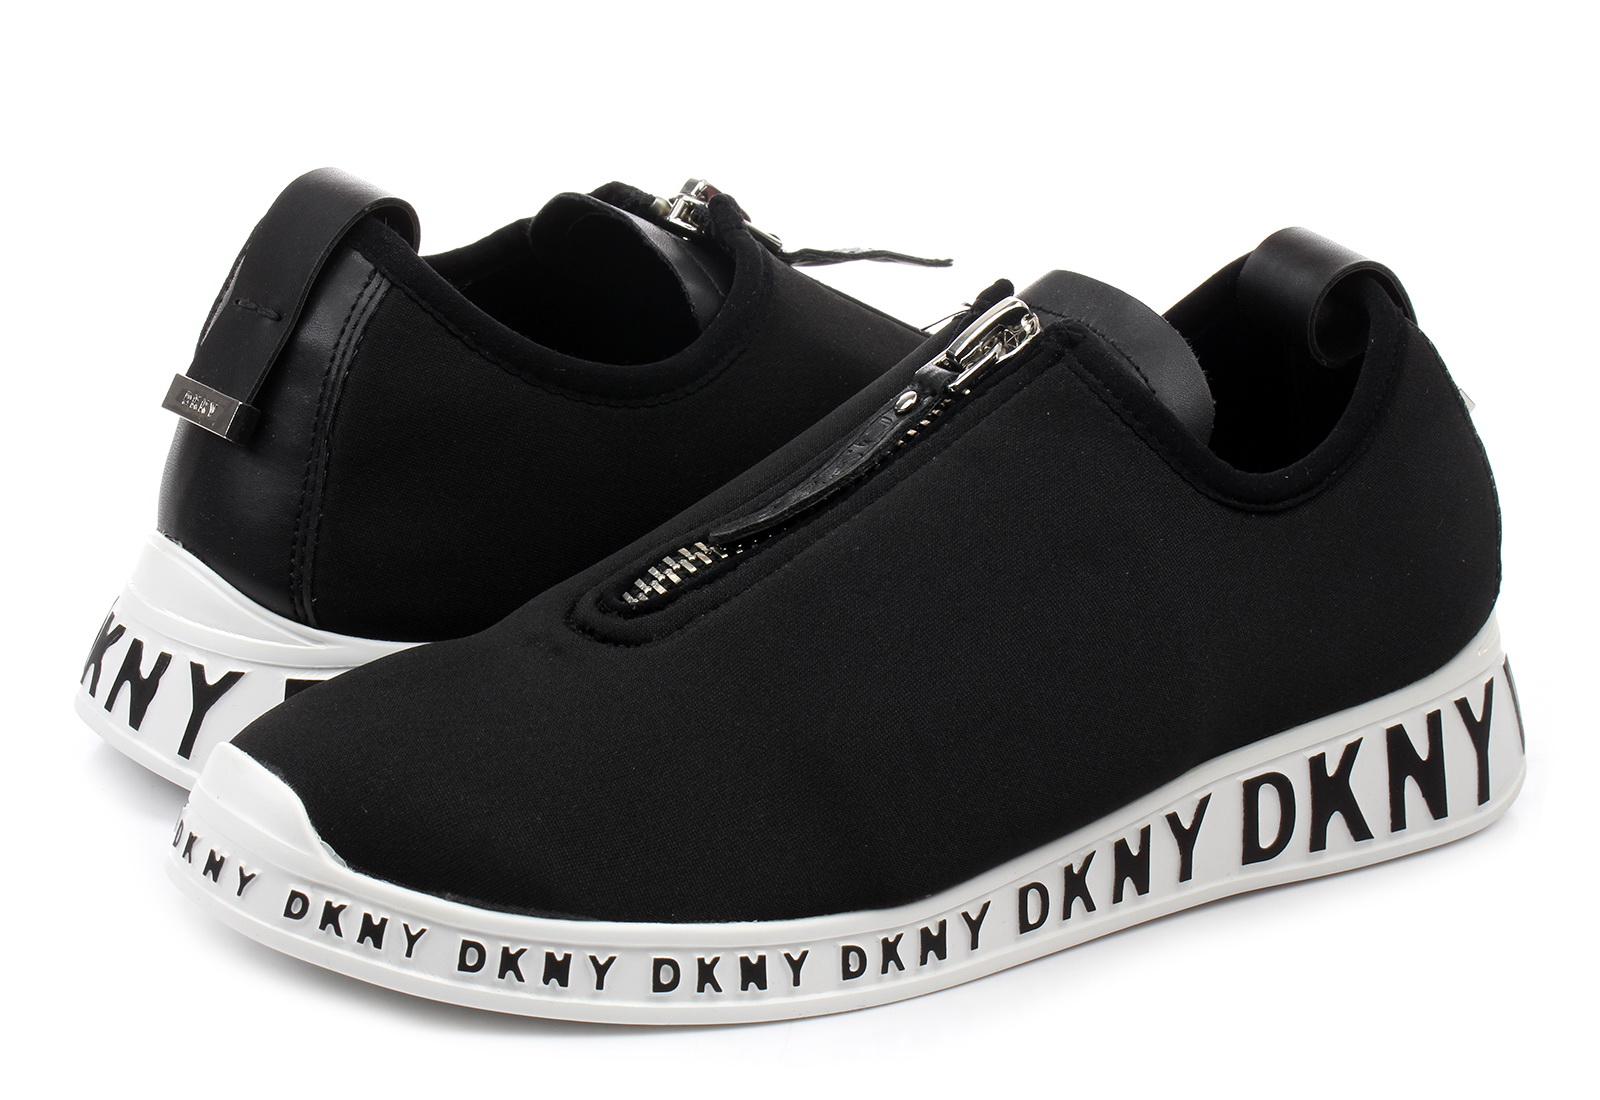 dkny shoes